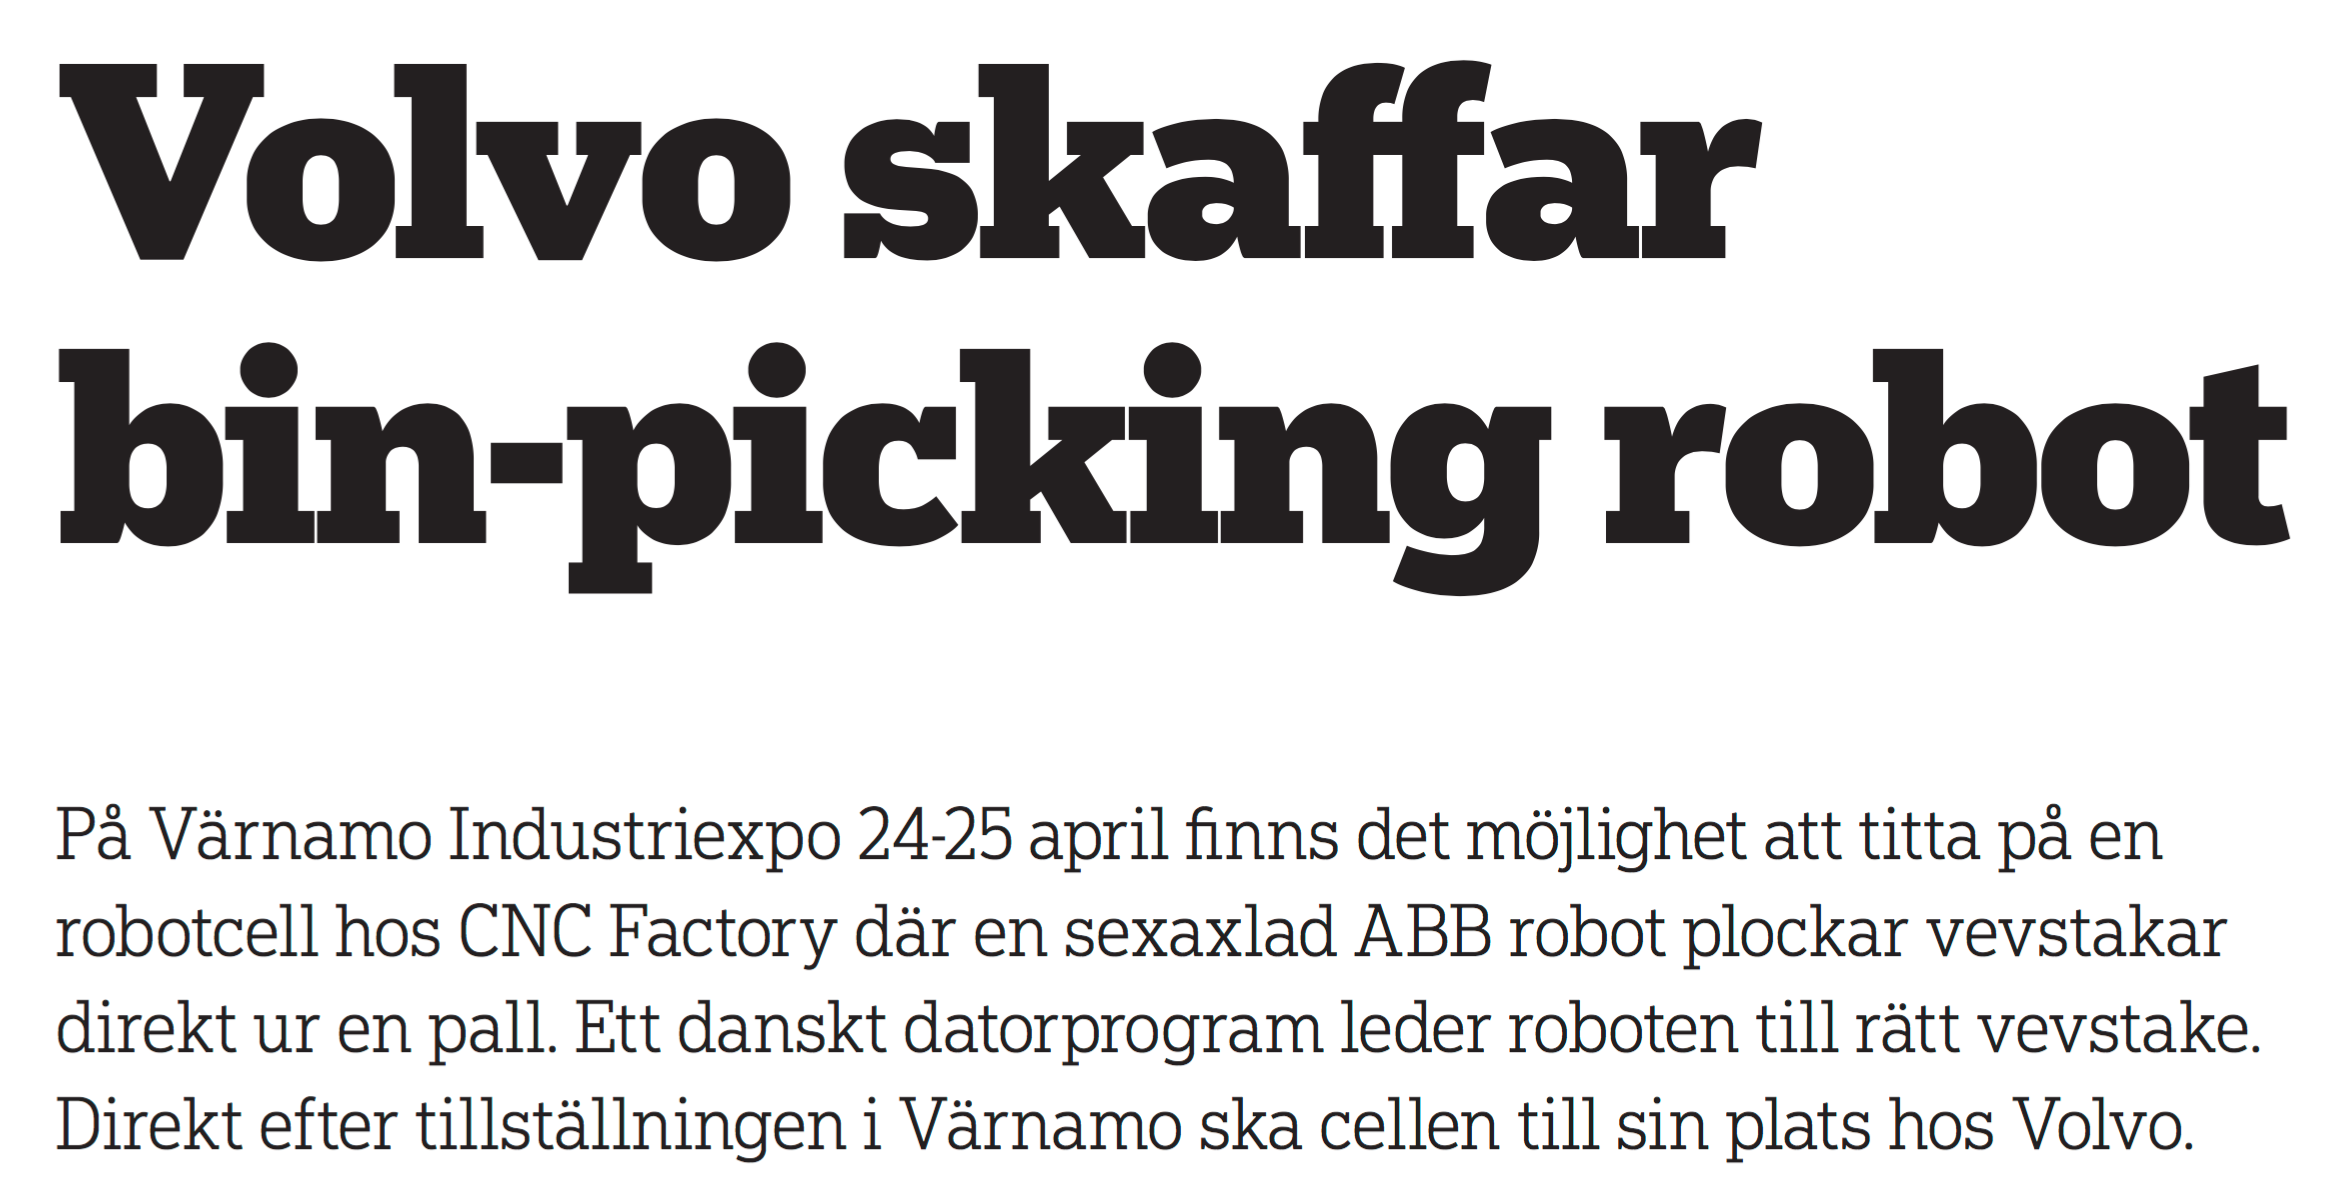 Volvo skaffar bin-picking robot